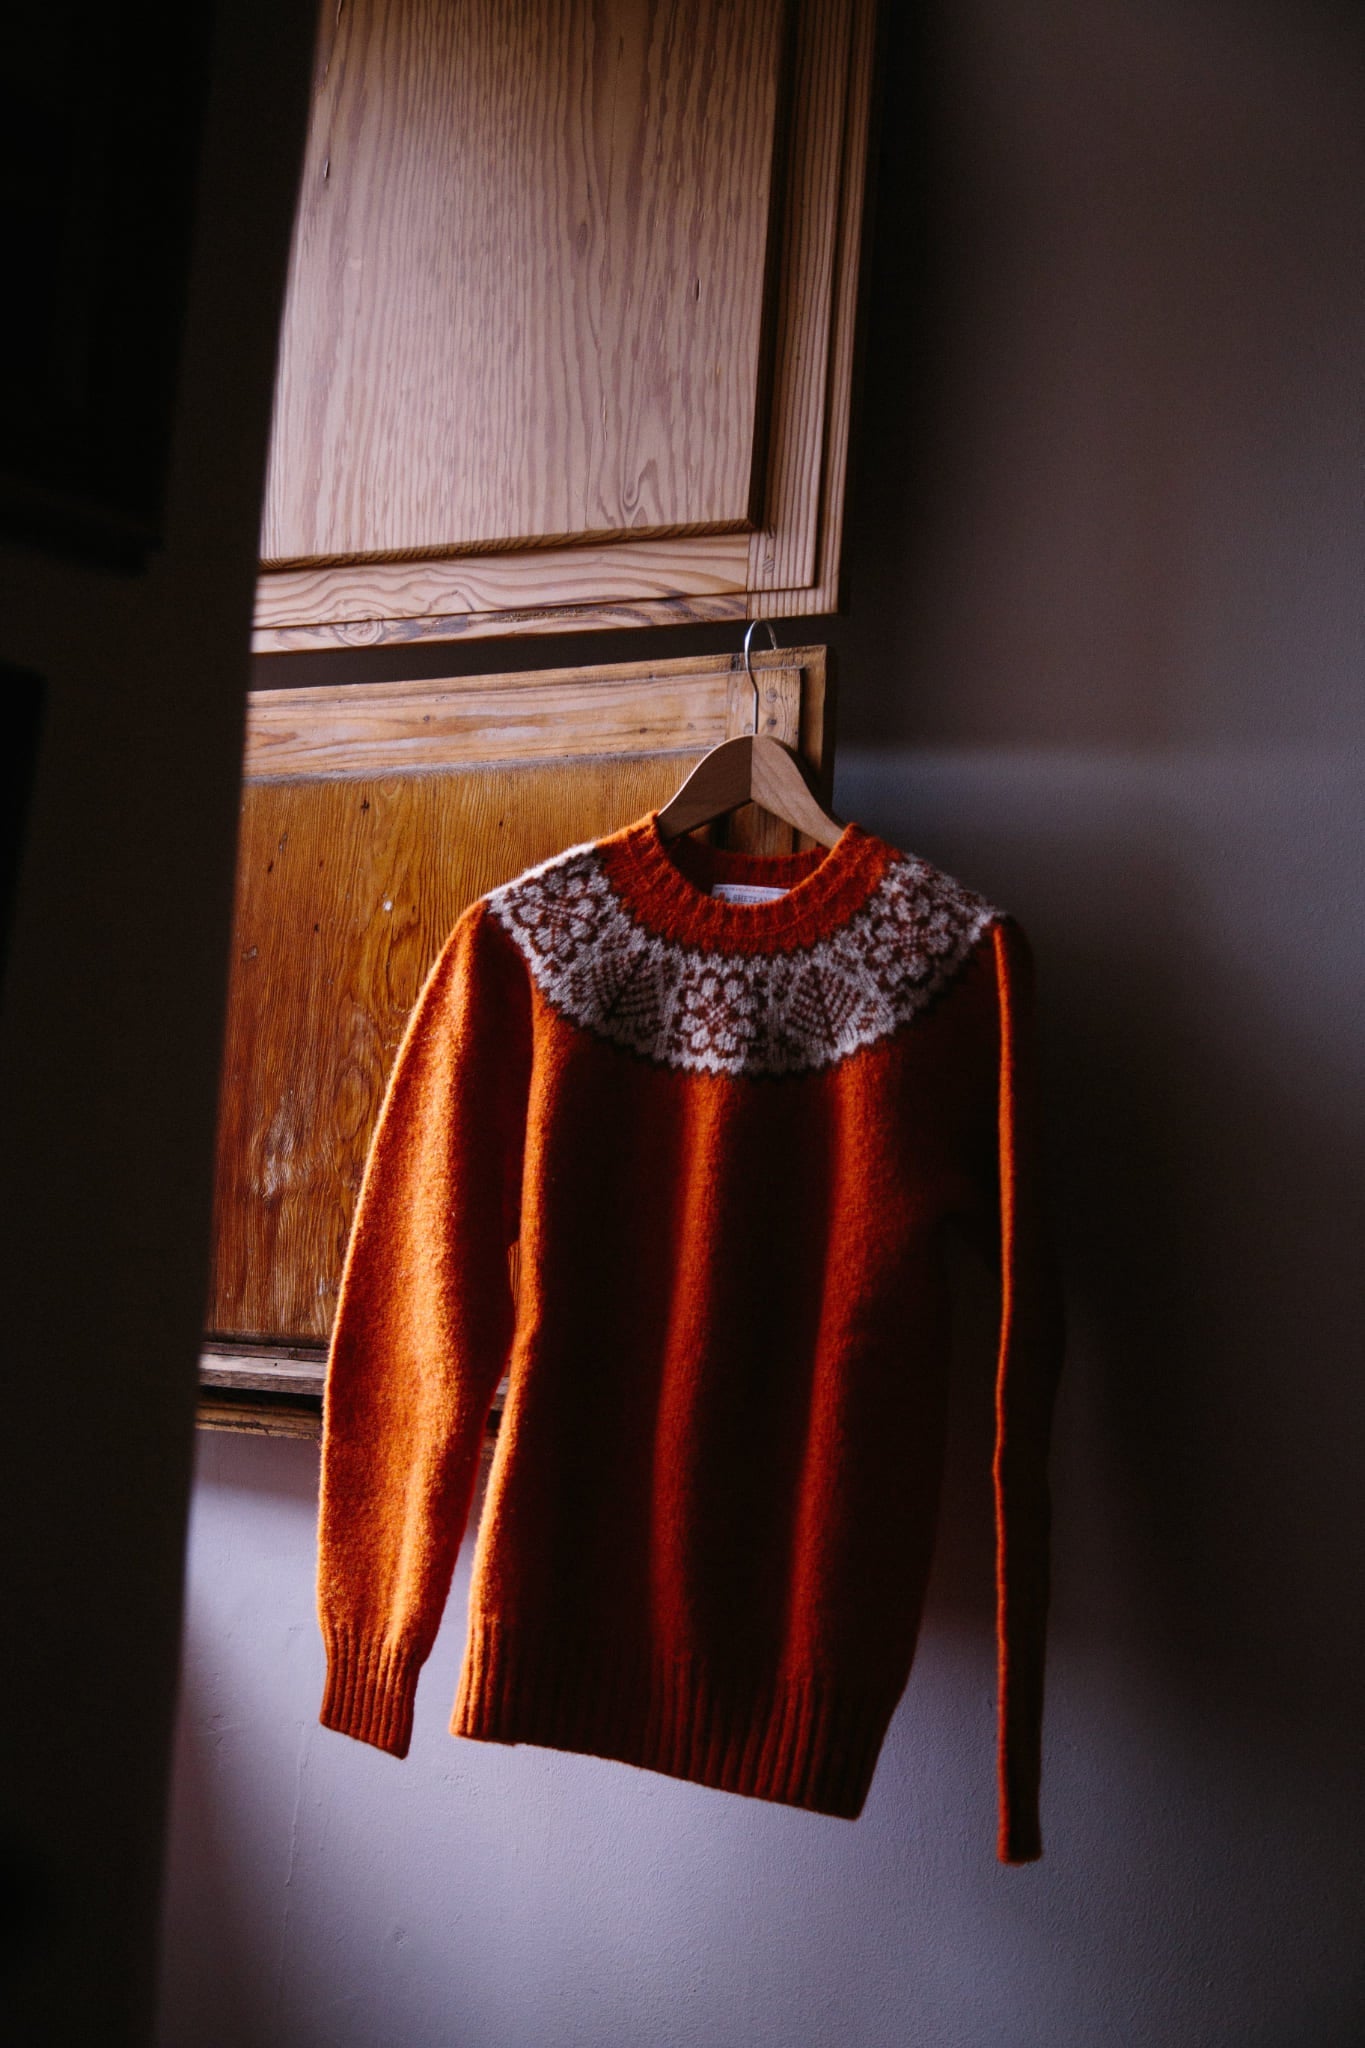 A Shetland woolen pullover jumper in Fair Isle Yoke, iron rust red. Hung on a wooden hanger from a window shutter.